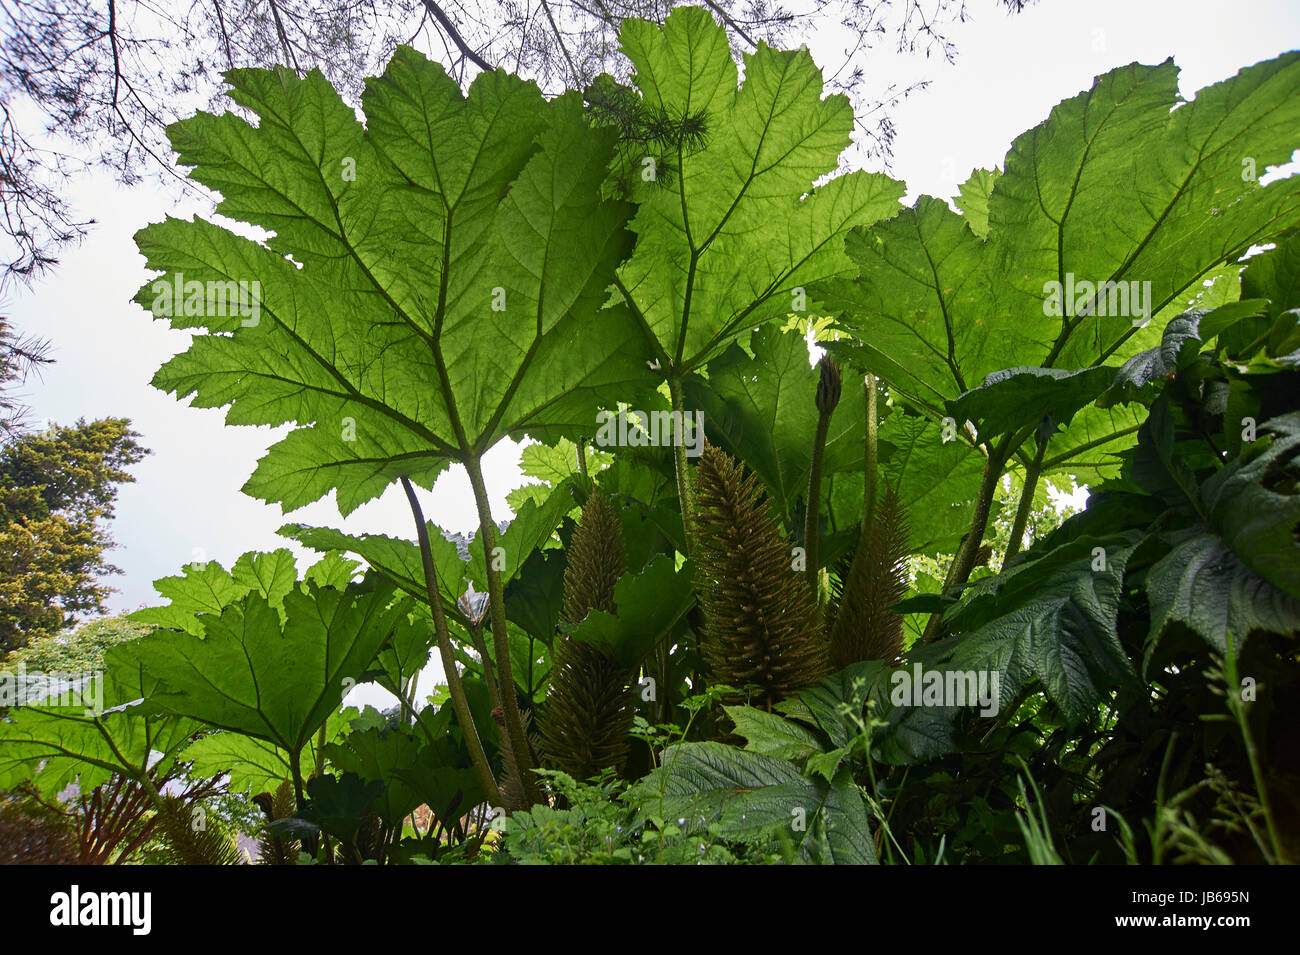 Gunnera manicata Chilean Giant rhubarb Stock Photo